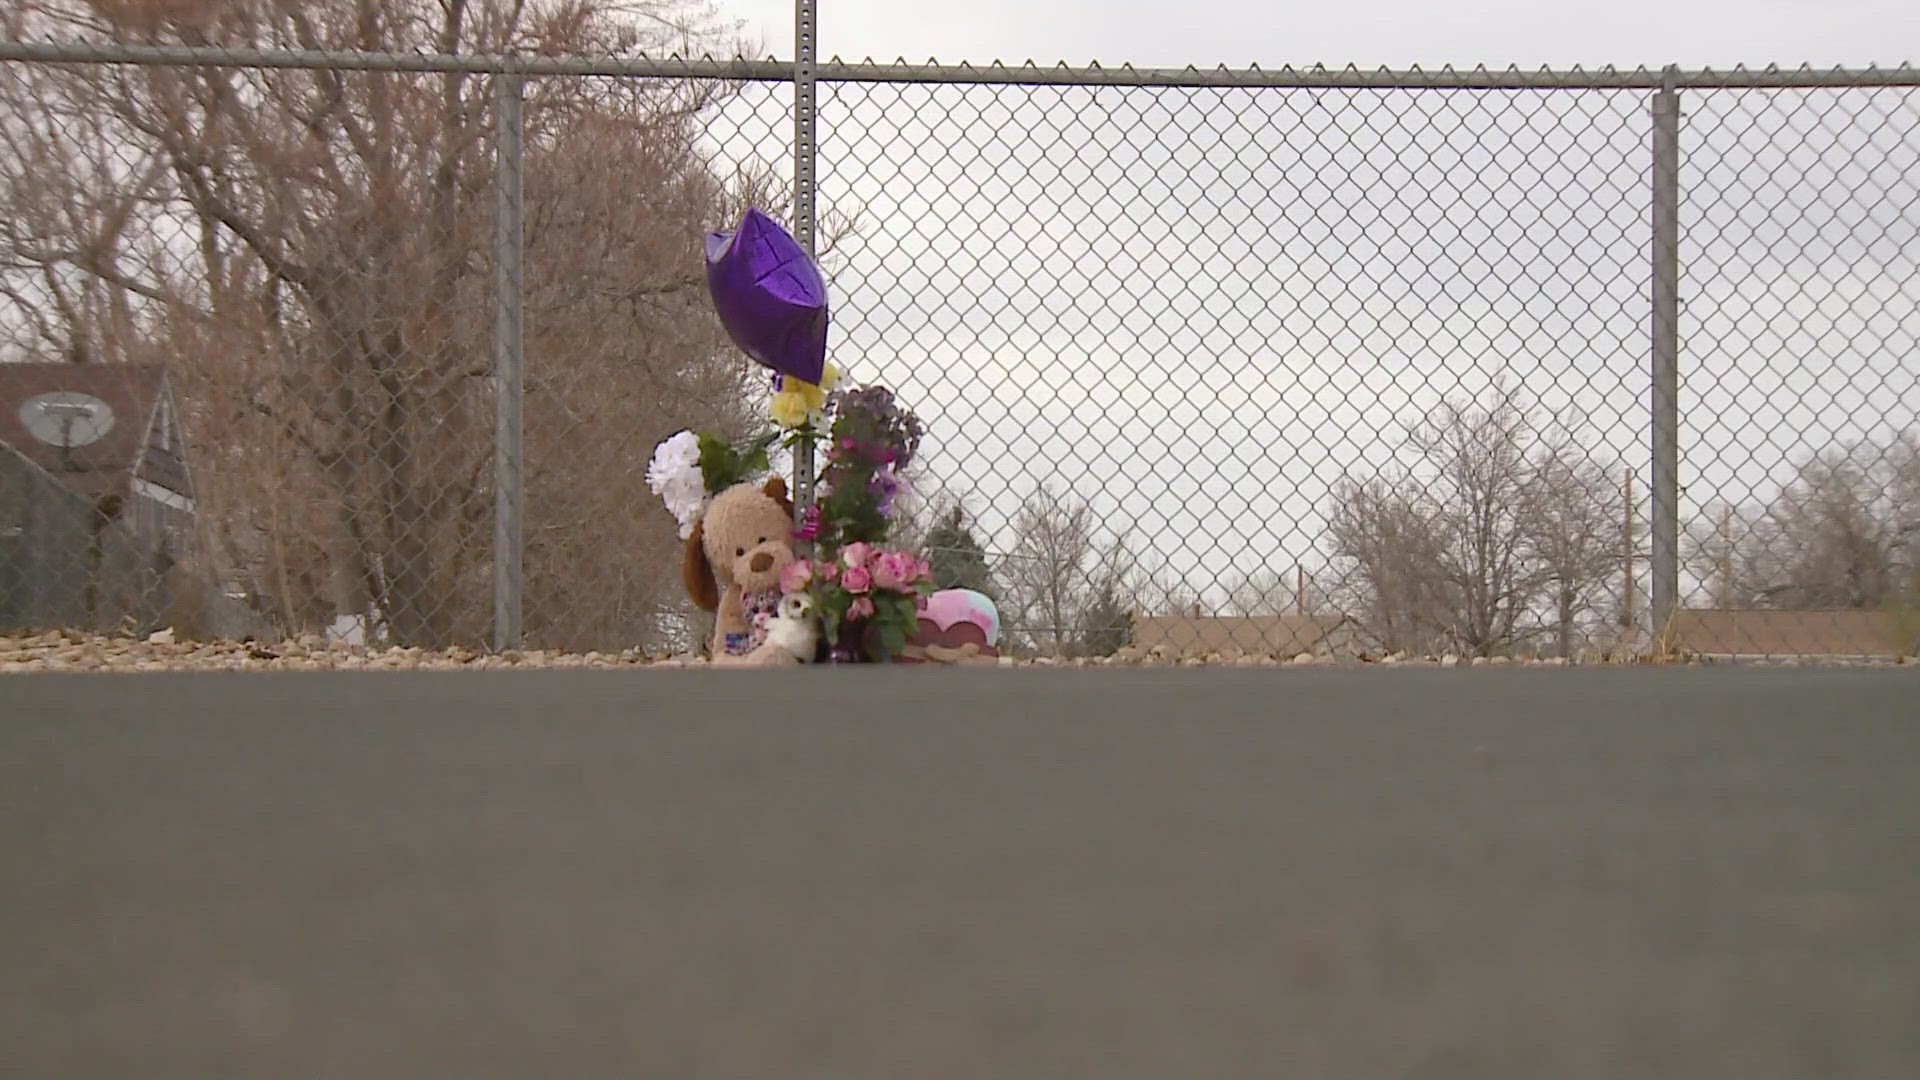 Karalynn Kincaid was crossing the street near an elementary school when she was killed in mid-April.